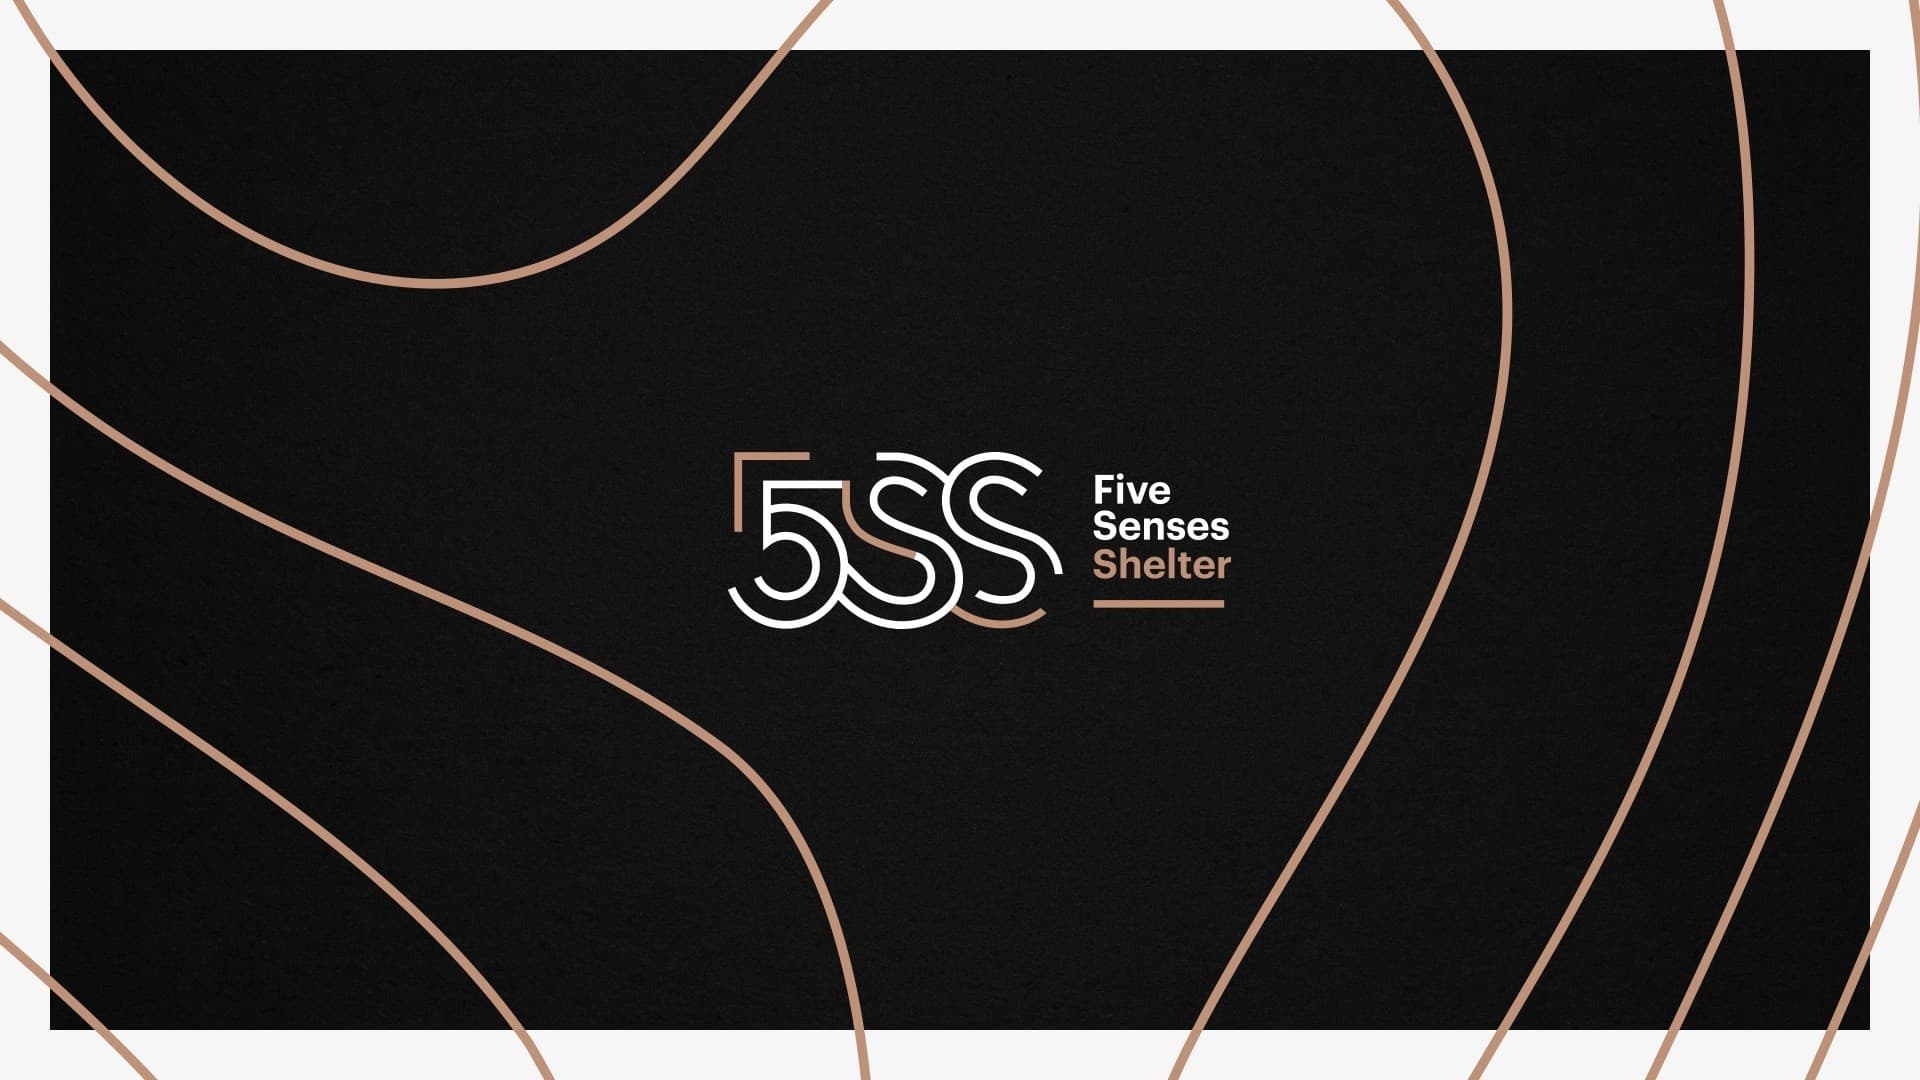 5SS - Five Senses Shelter